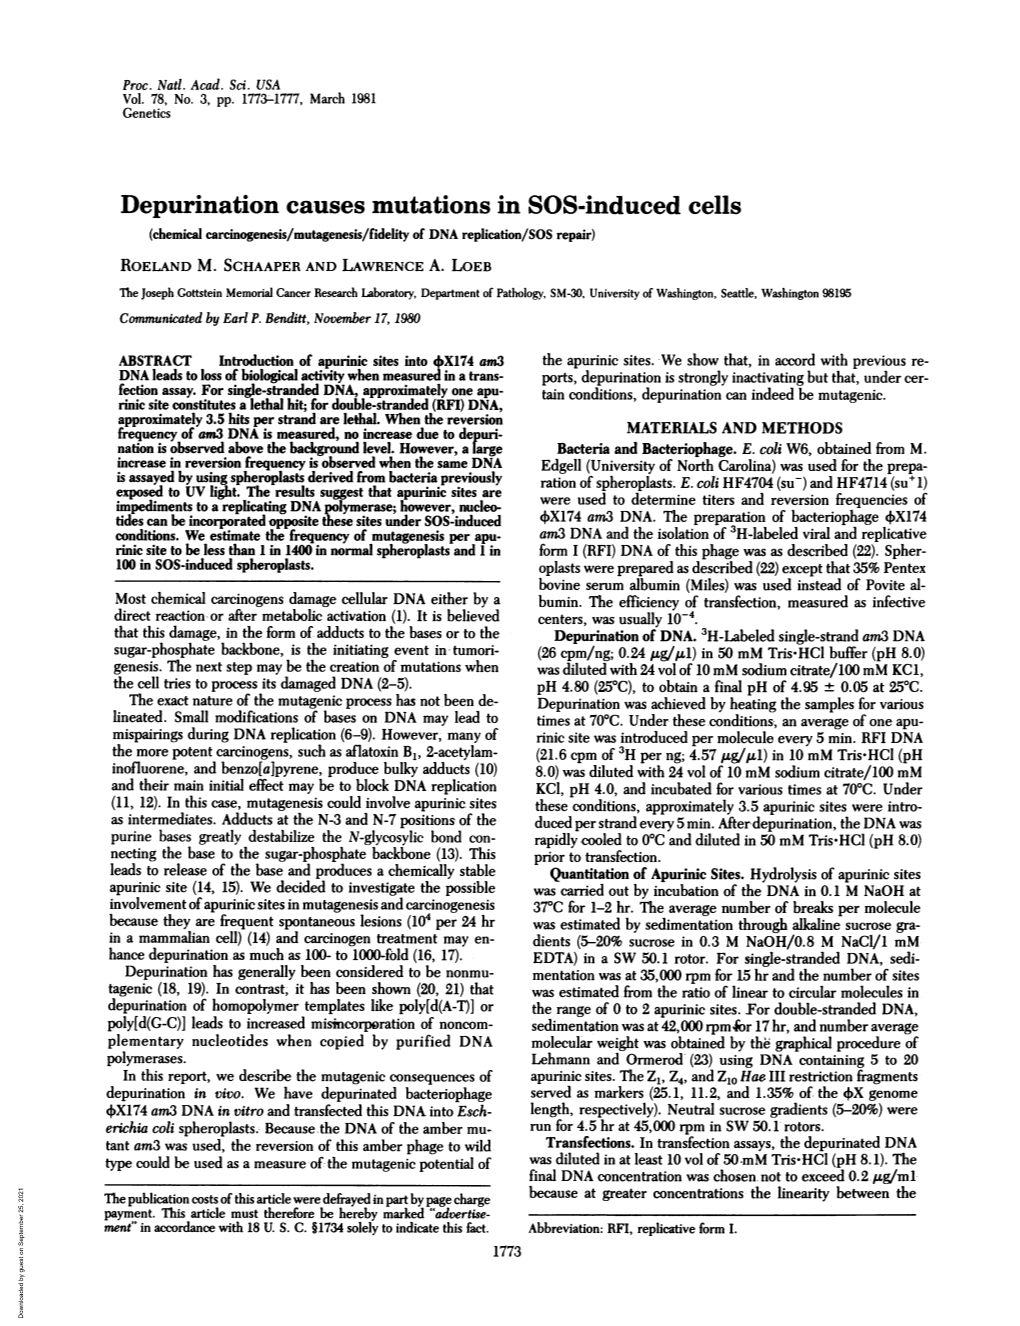 Depurination Causes Mutations in SOS-Induced Cells (Chemical Carcinogenesis/Mutagenesis/Fidelity of DNA Replication/SOS Repair) ROELAND M